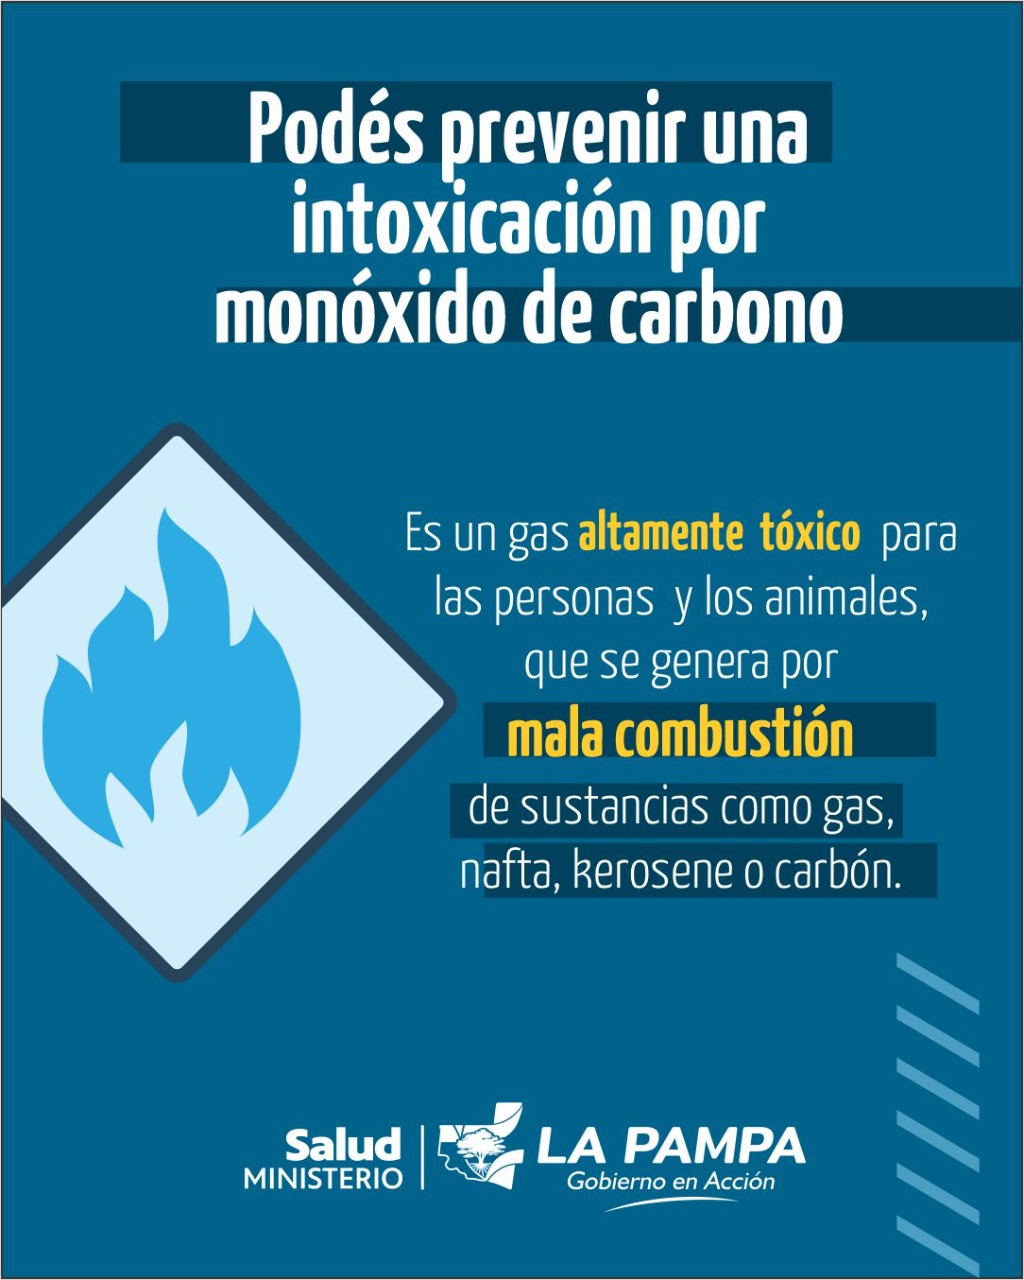 Medidas preventivas para evitar intoxicaciones por monóxido de carbono